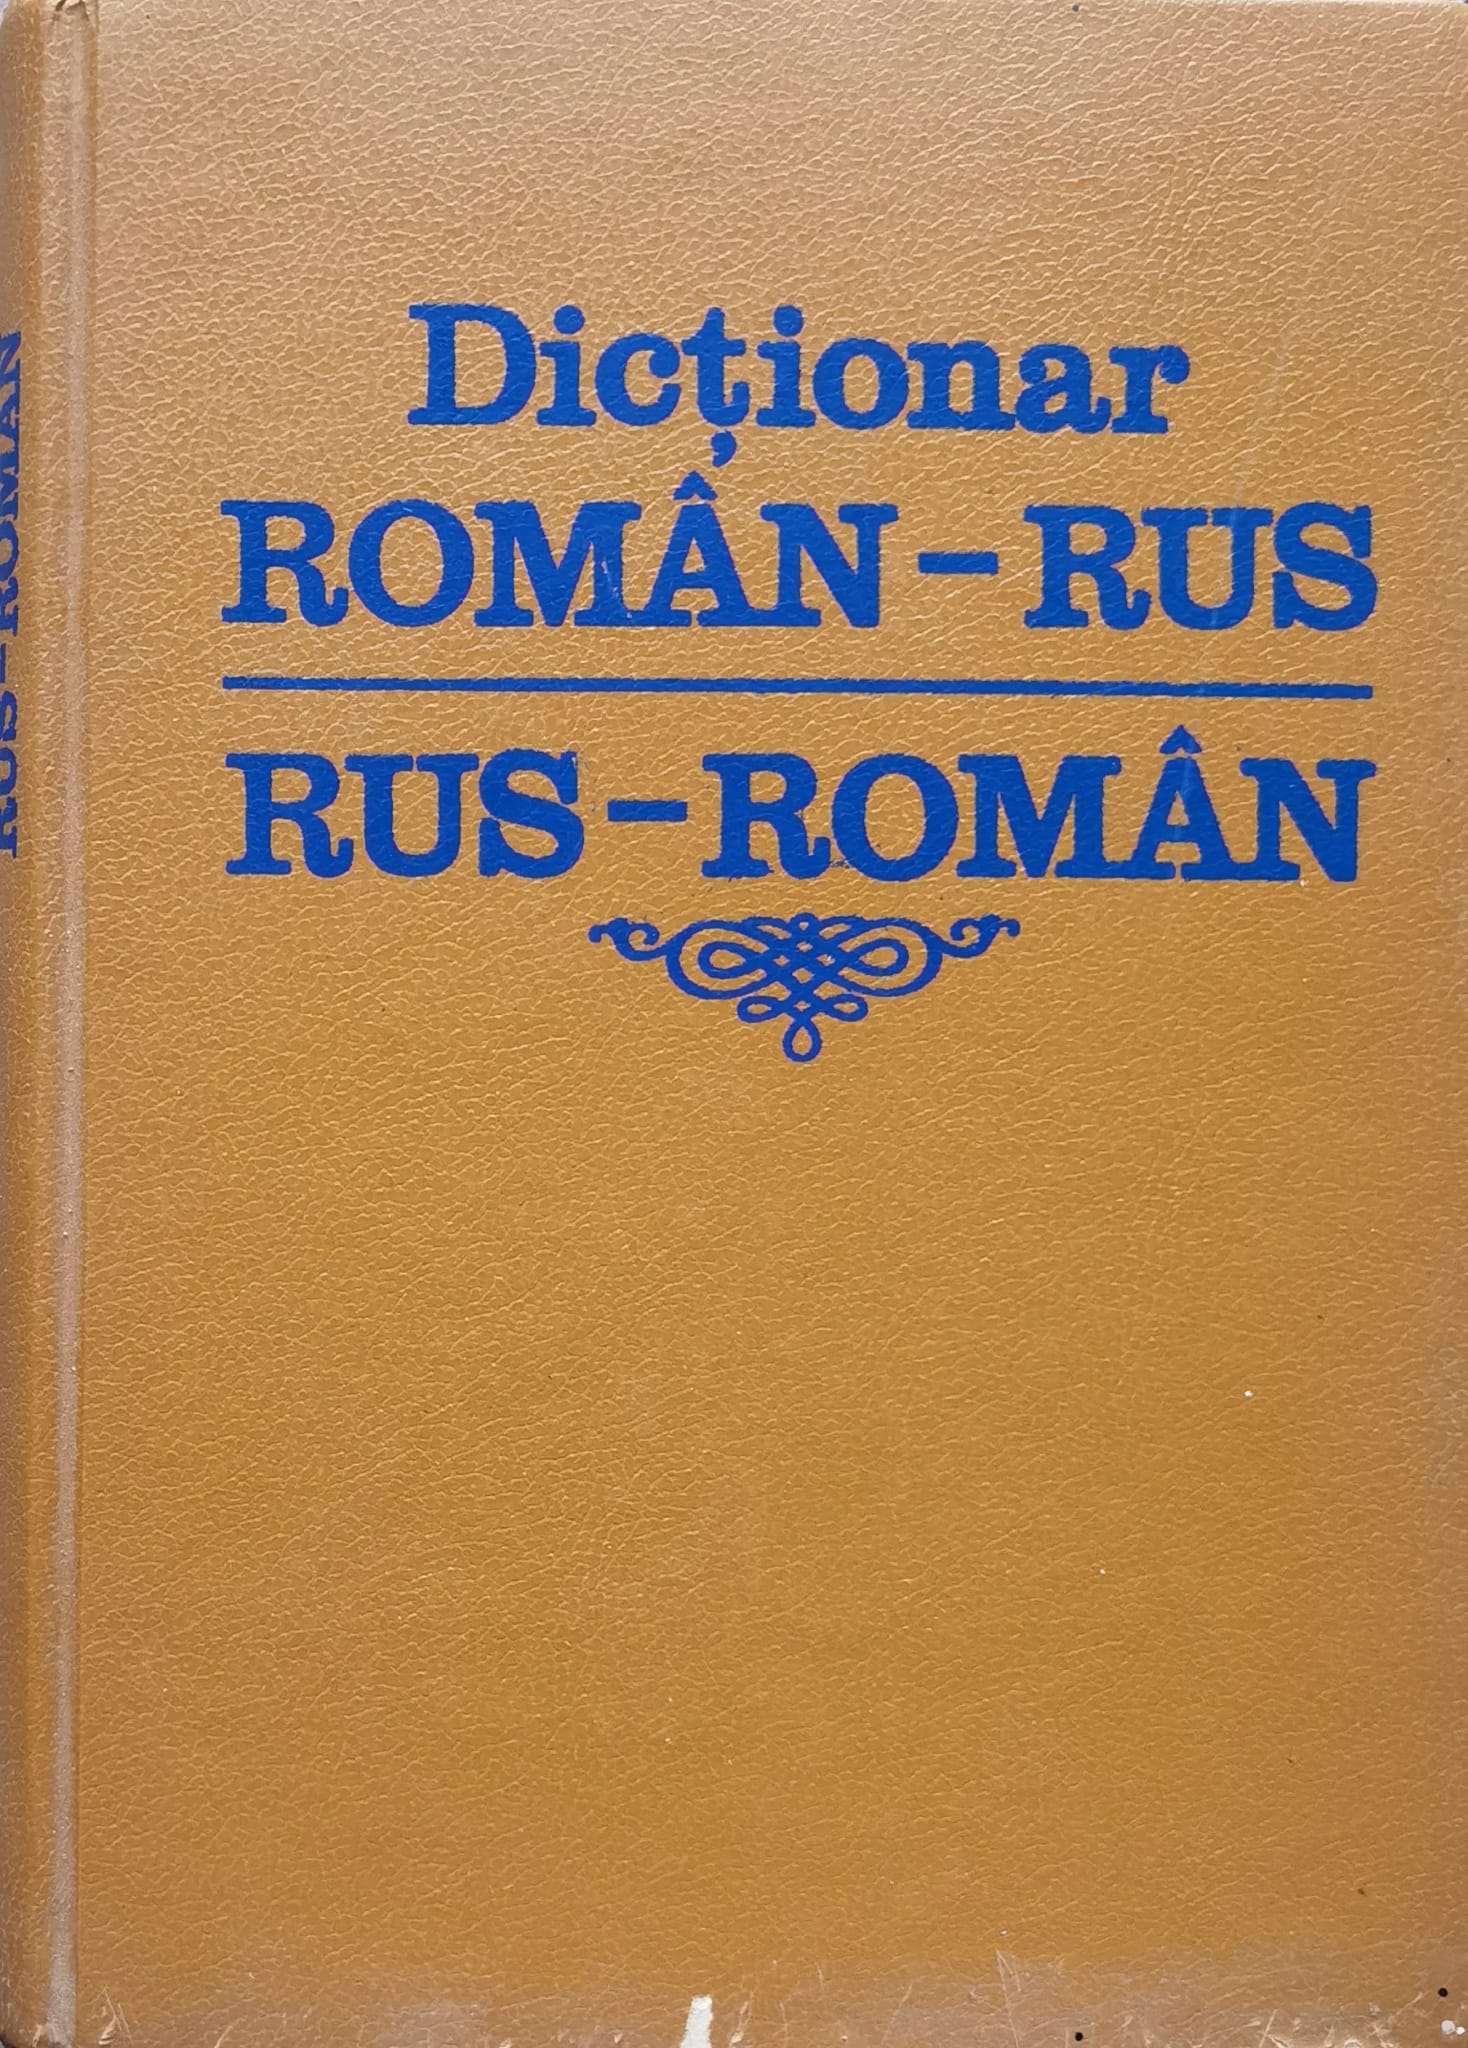 dictionar roman-rus, rus-roman                                                                       eugen p. noveanu                                                                                    